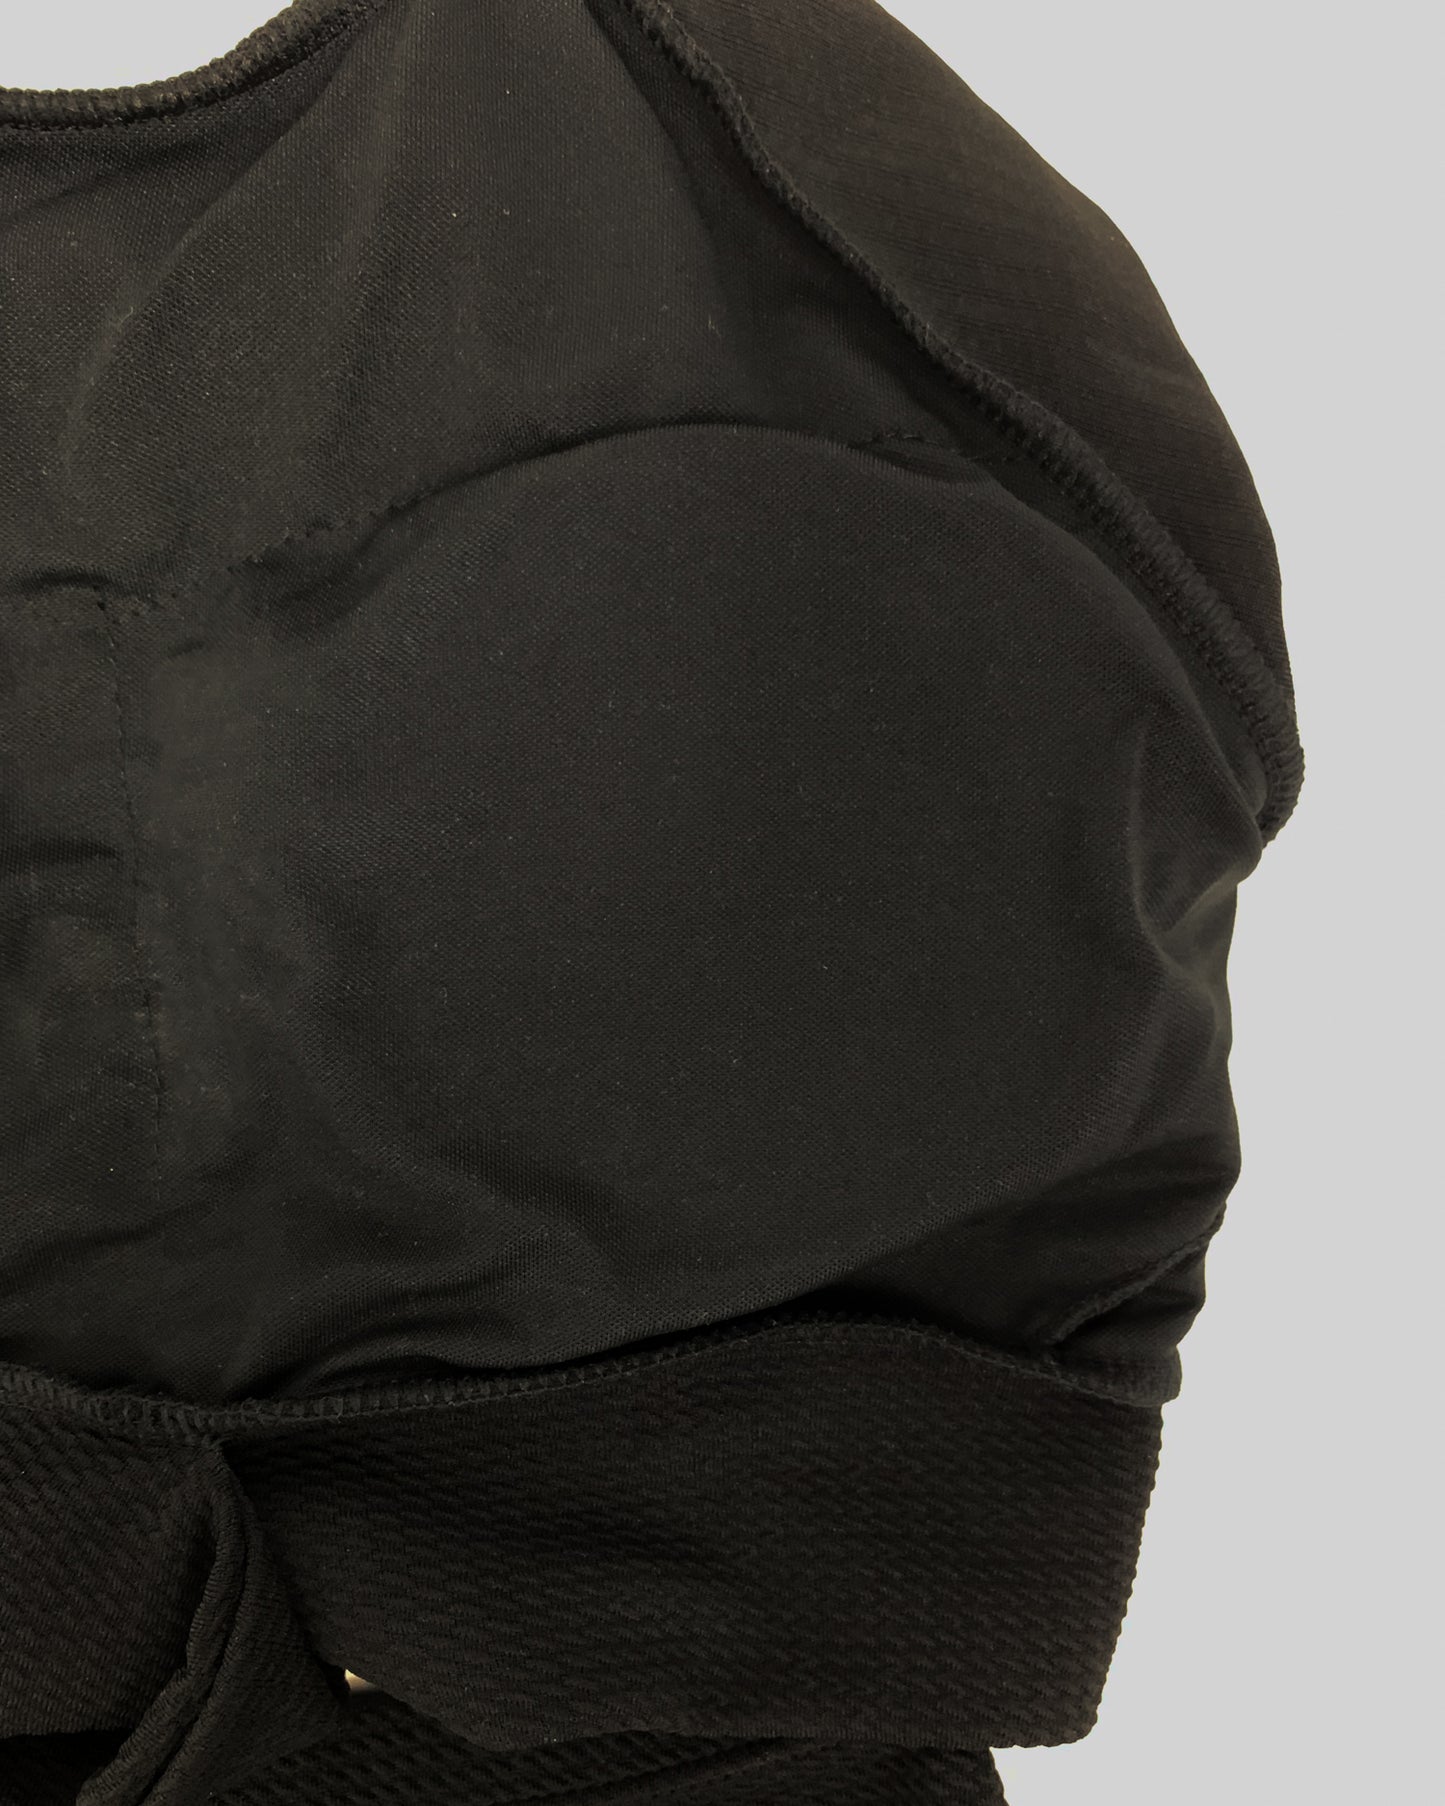 Black texture cropped top & high waist pants set swimwear *pre-order*